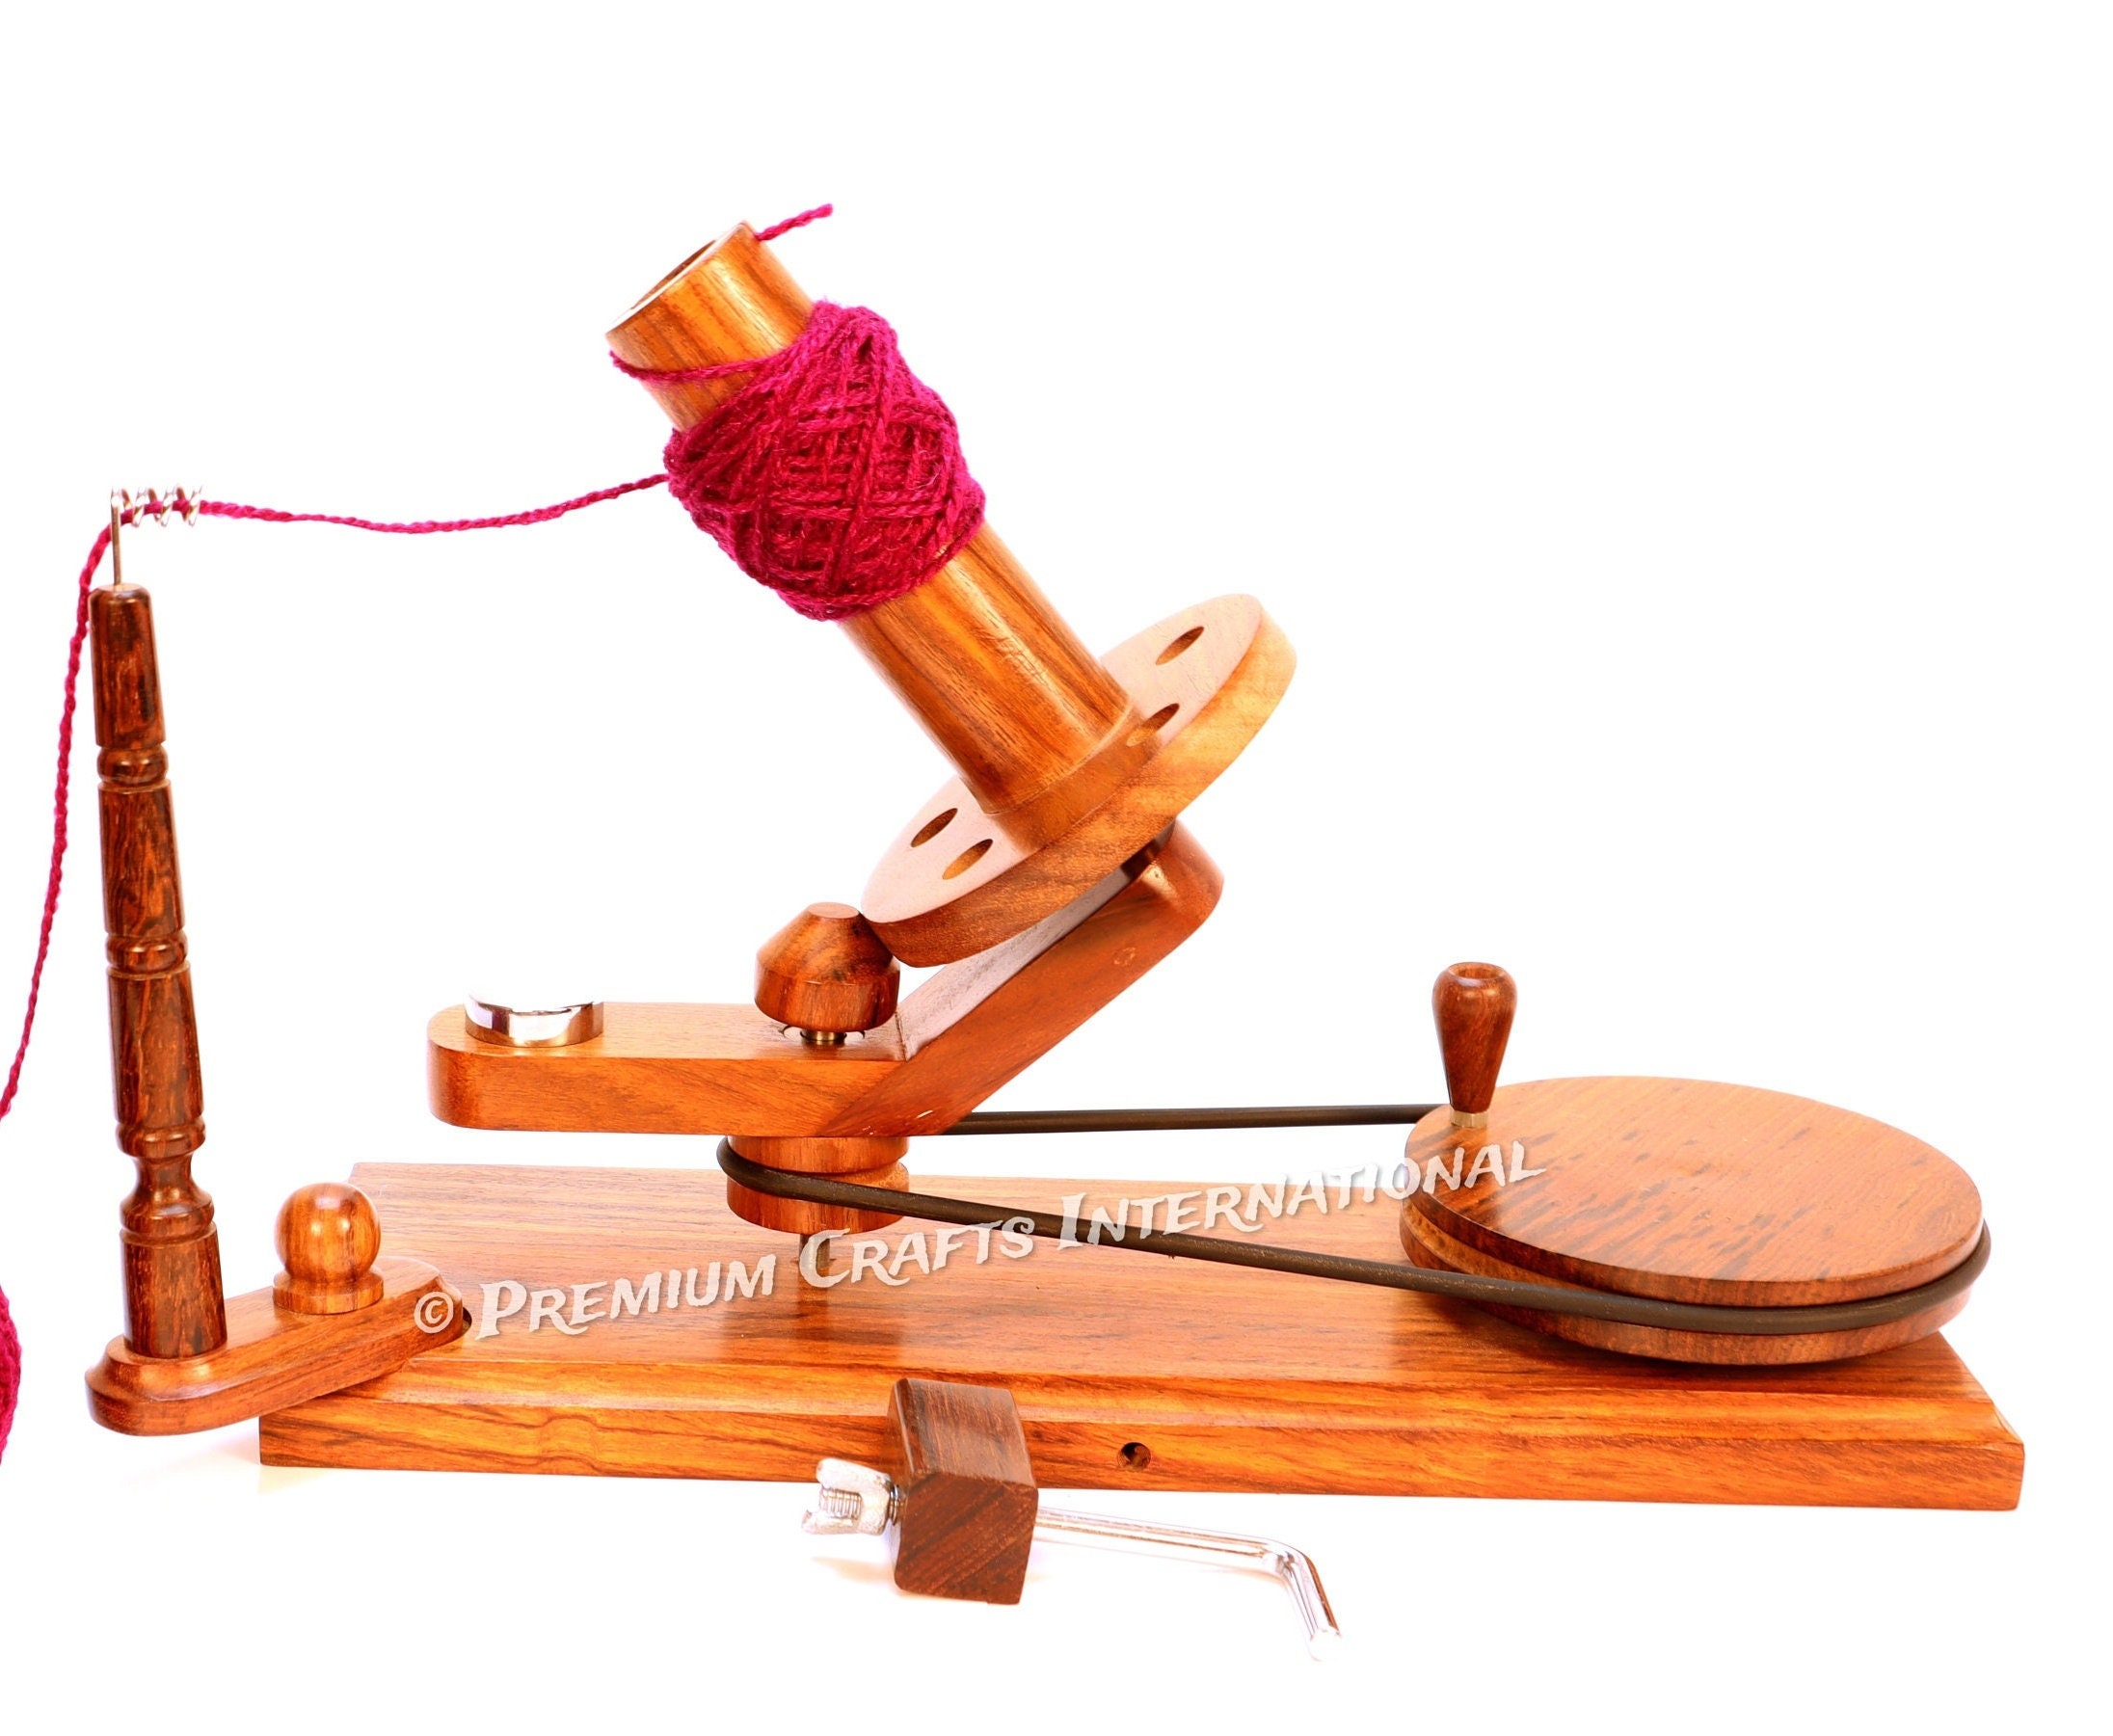 Crochet Hooks, Crochet Hooks Box and Yarn Bowl Set of 13 3.5 Mm to /12 Mm,  for Knitting and Crocheting Needles Yarn Crochet Hooks 